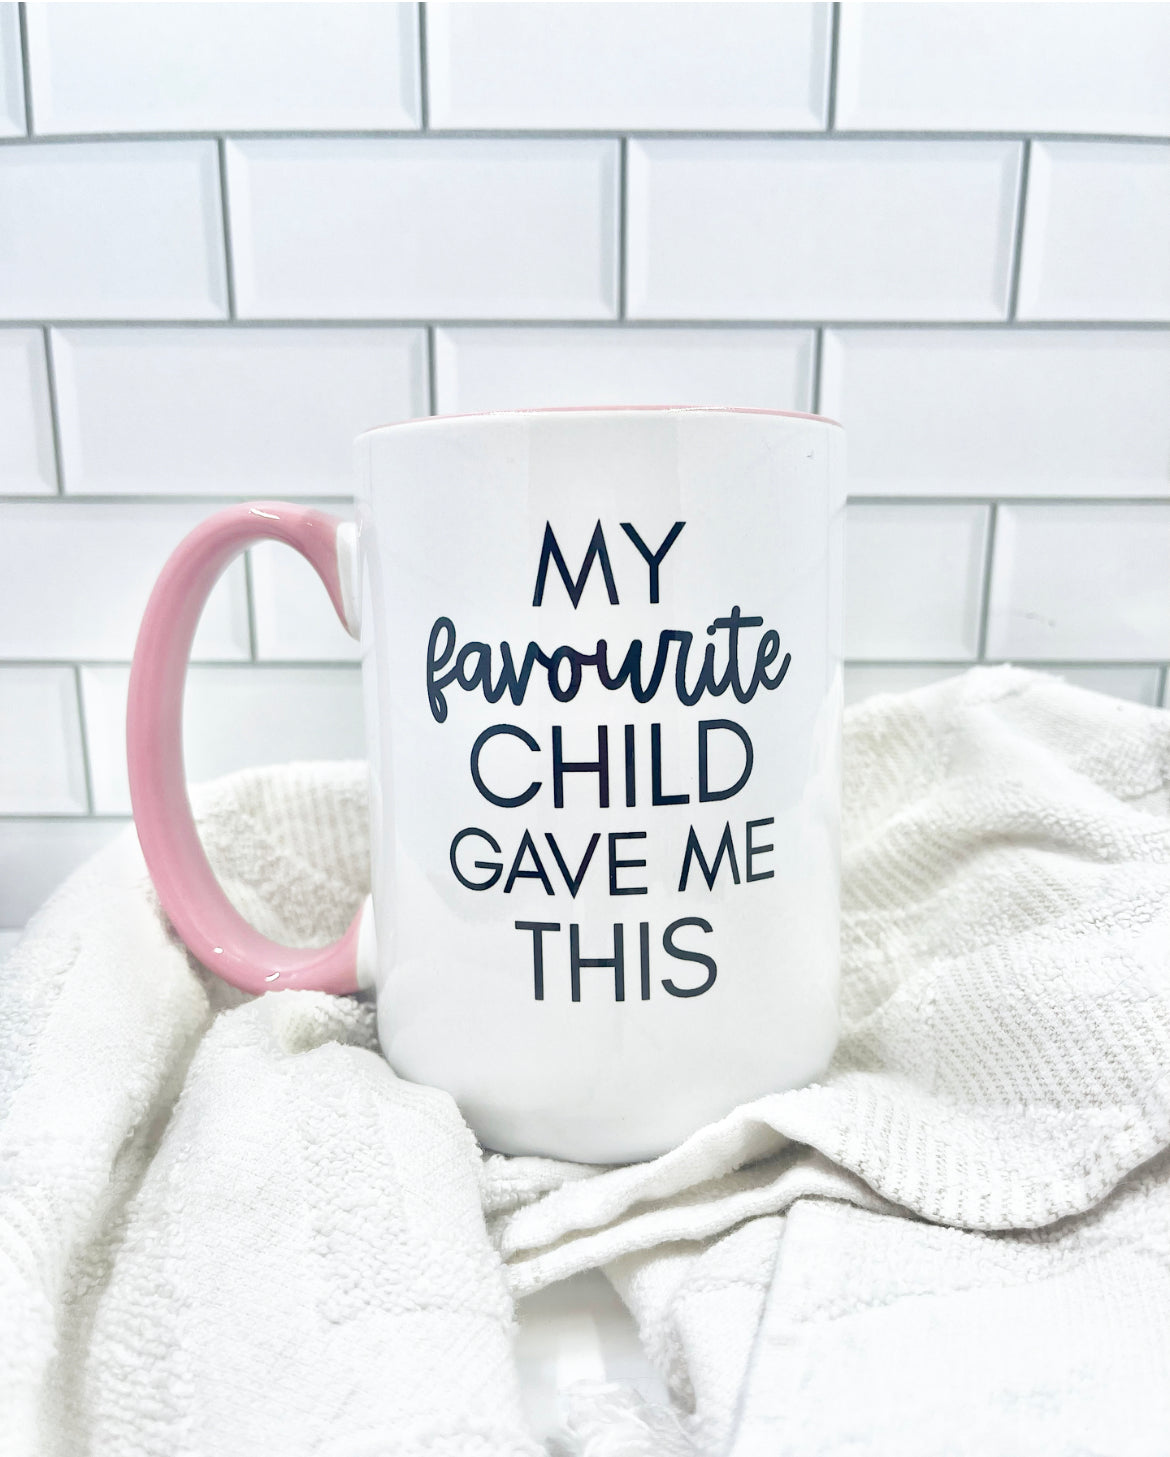 My Favourite Child Gave Me This Mug